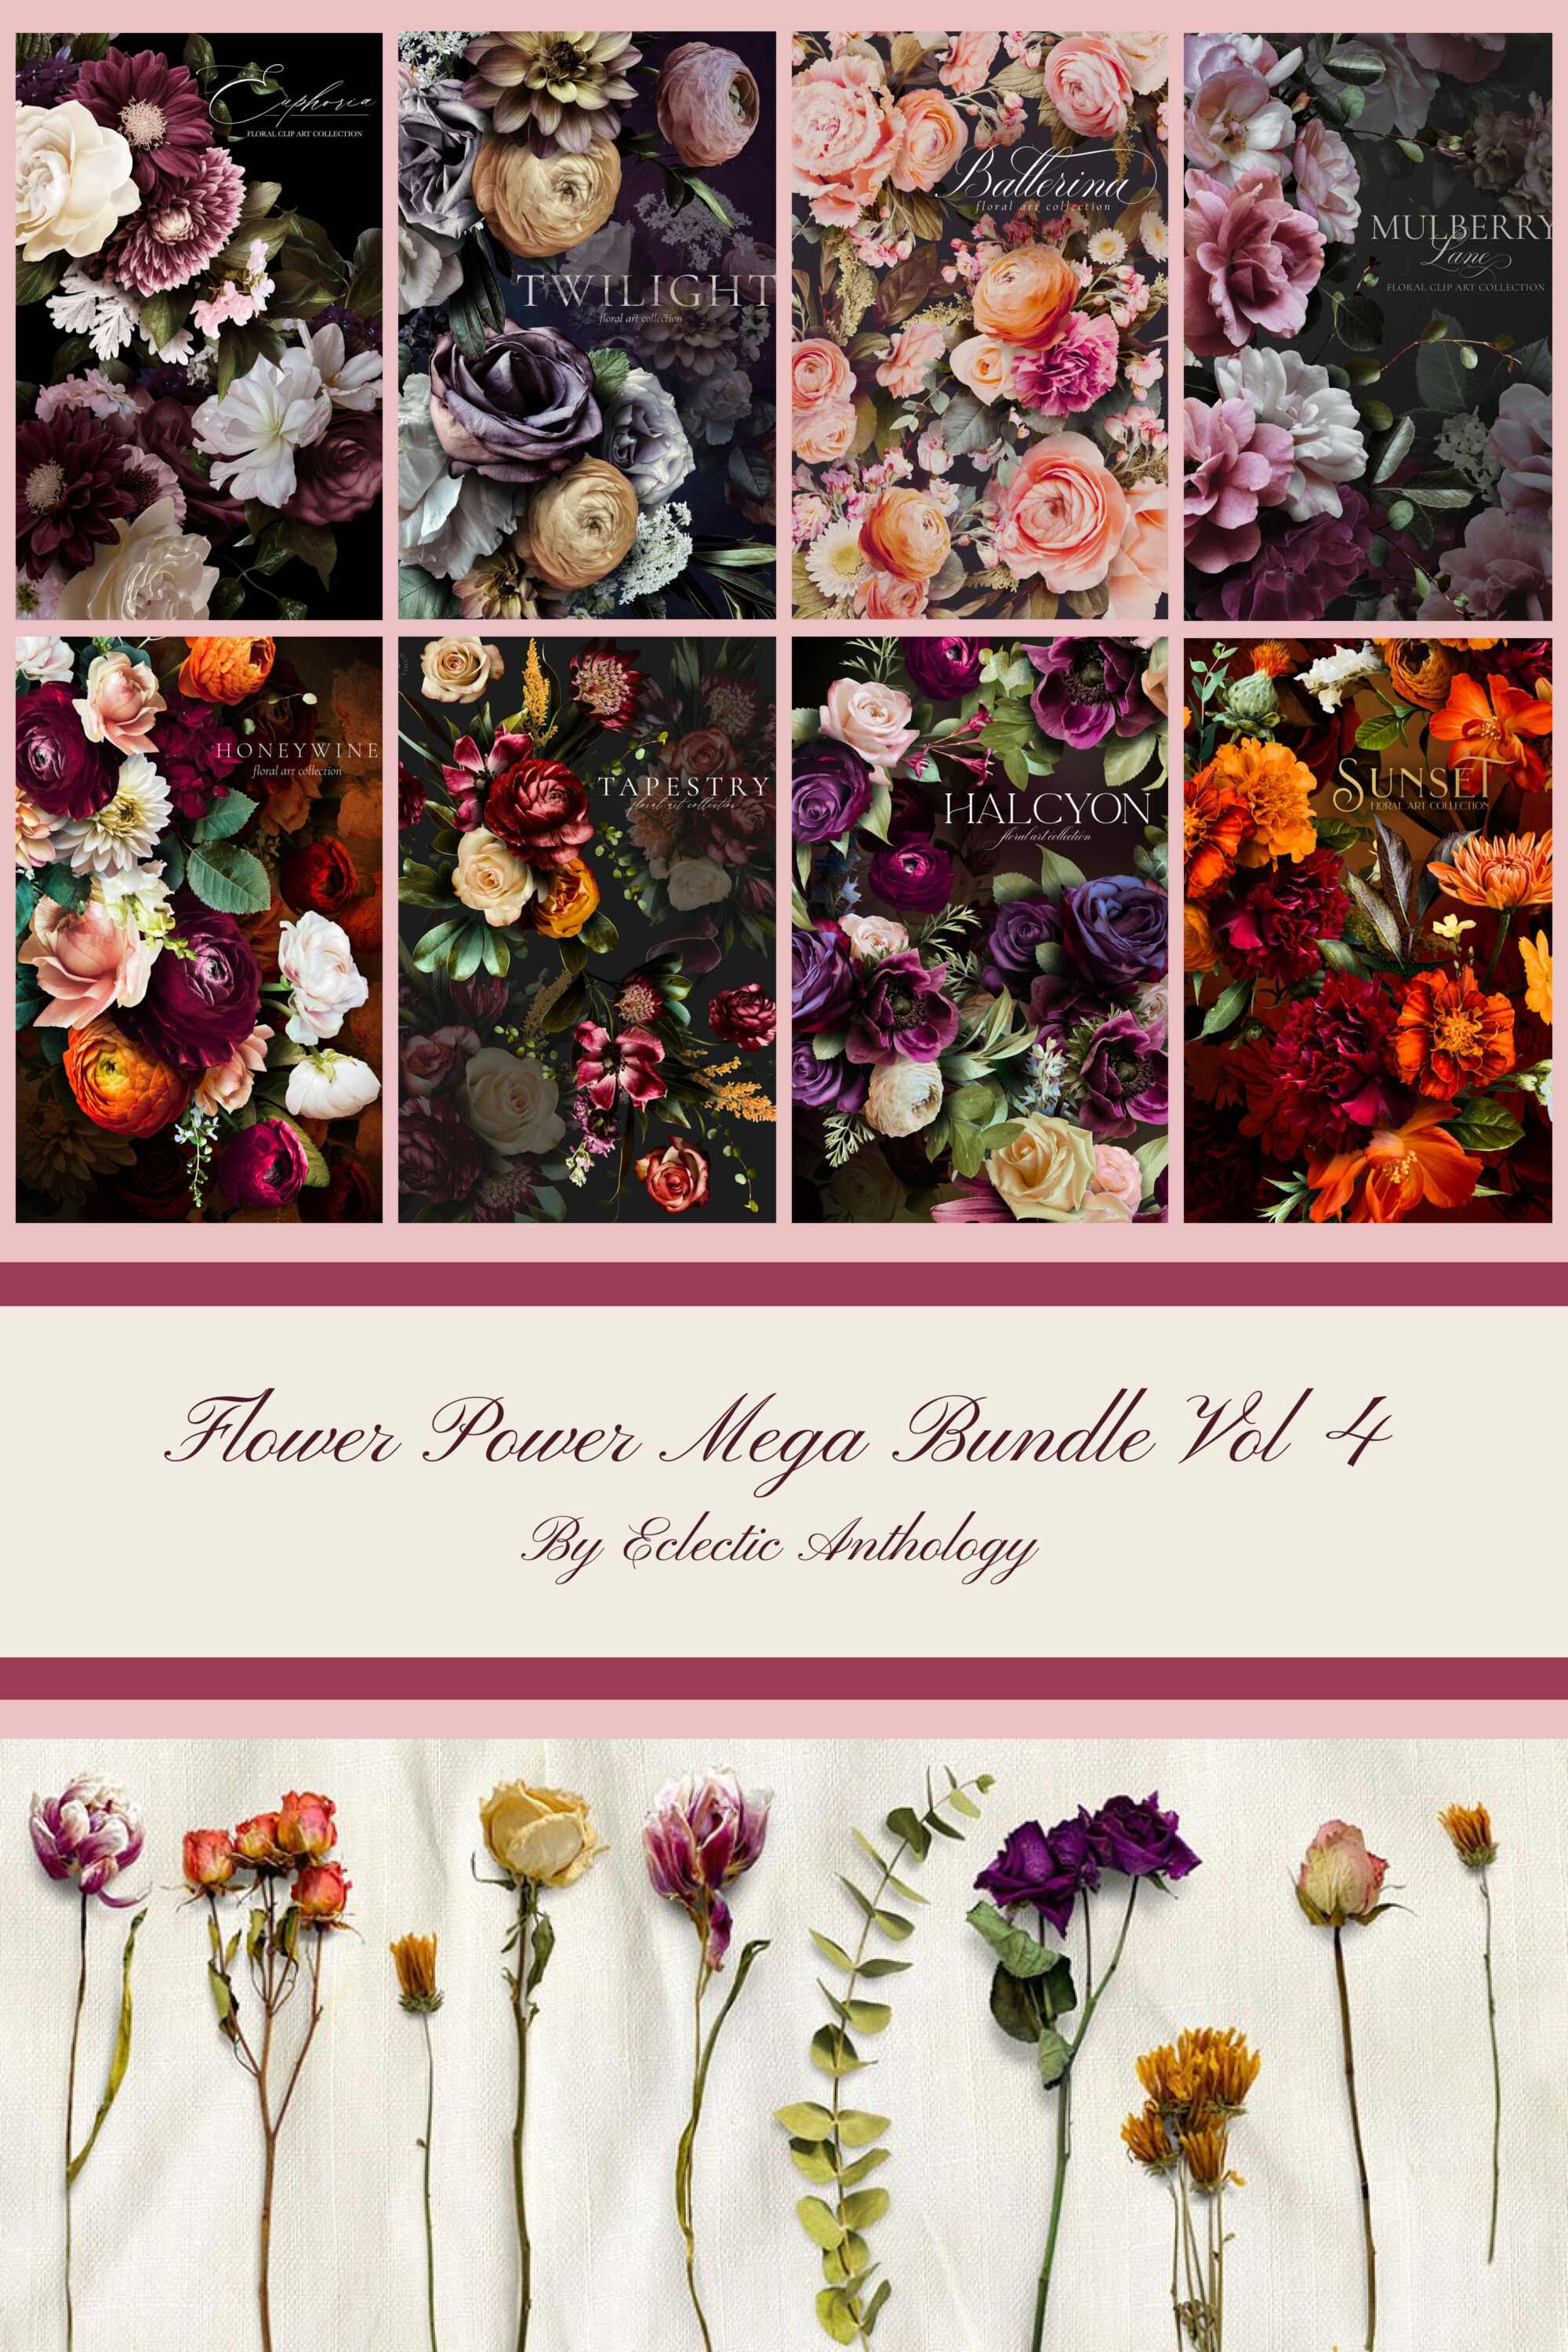 Flower Power Mega Bundle Vol 4 pinterest image.